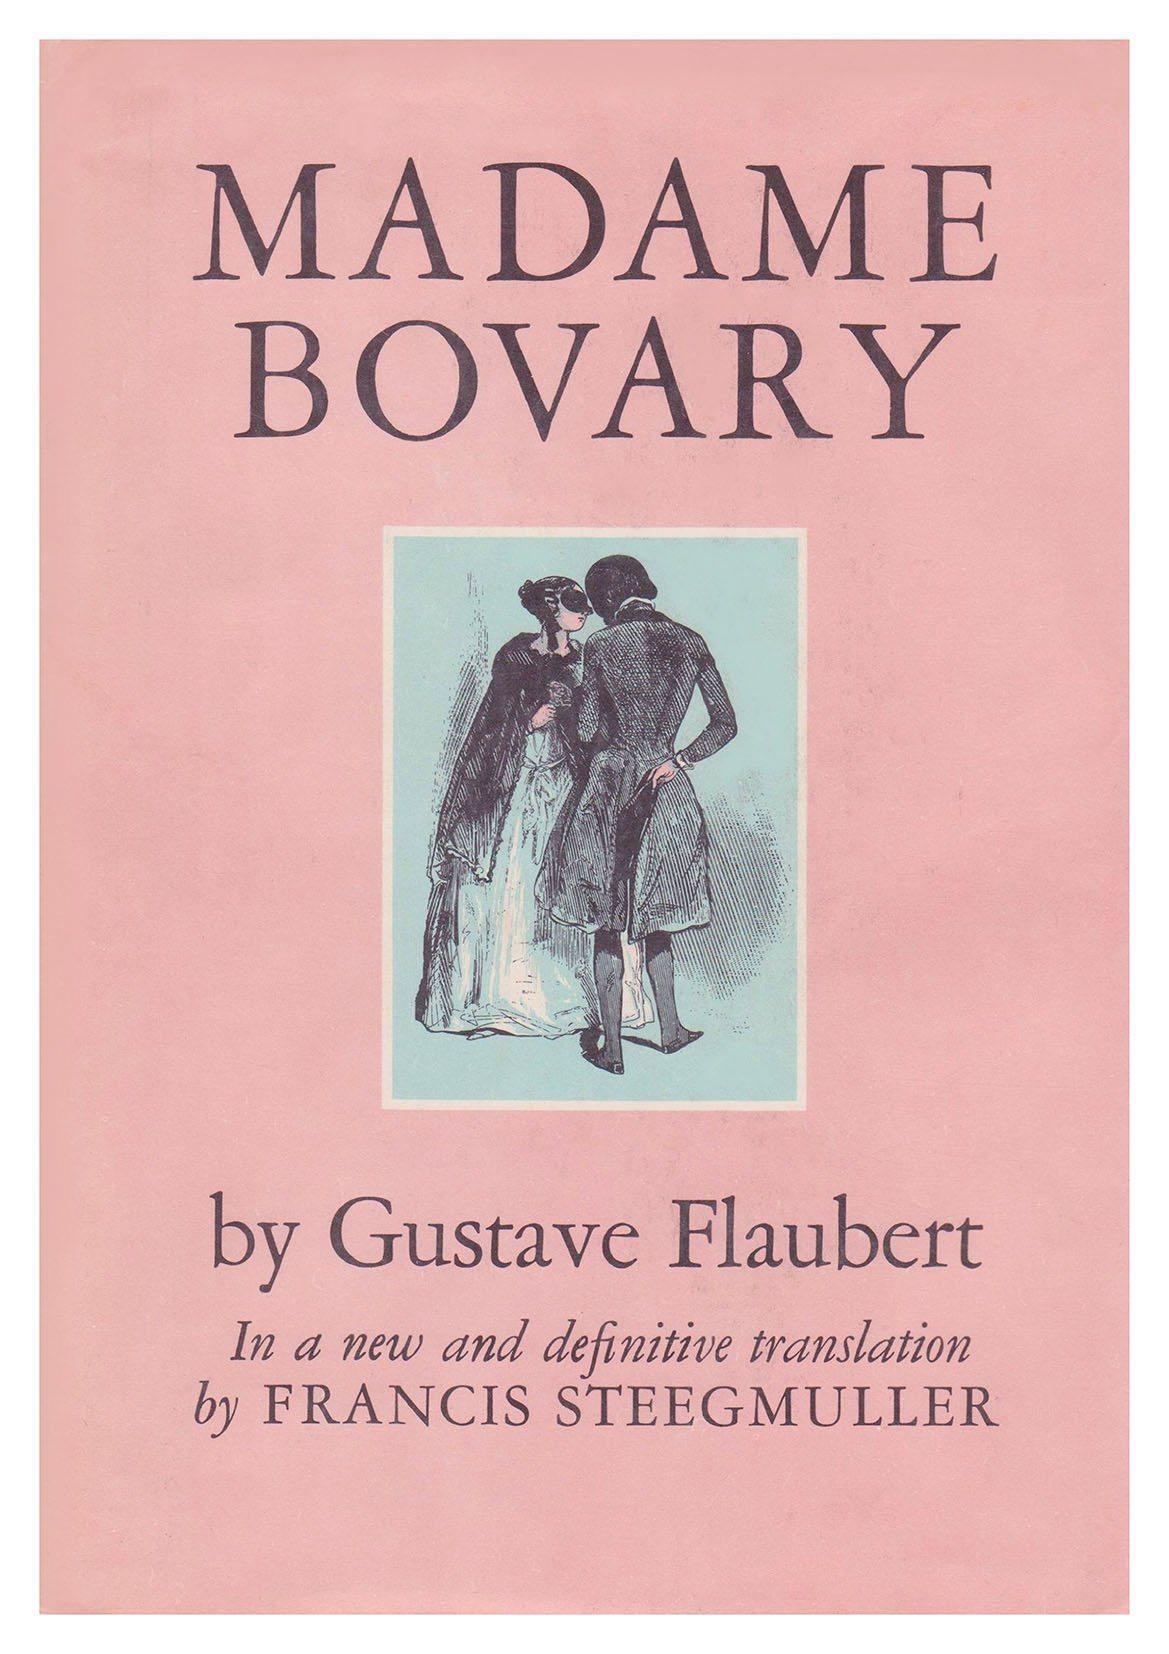 MADAME BOVARY POSTER: Vintage Flaubert Book Cover Art Print - Pimlico Prints